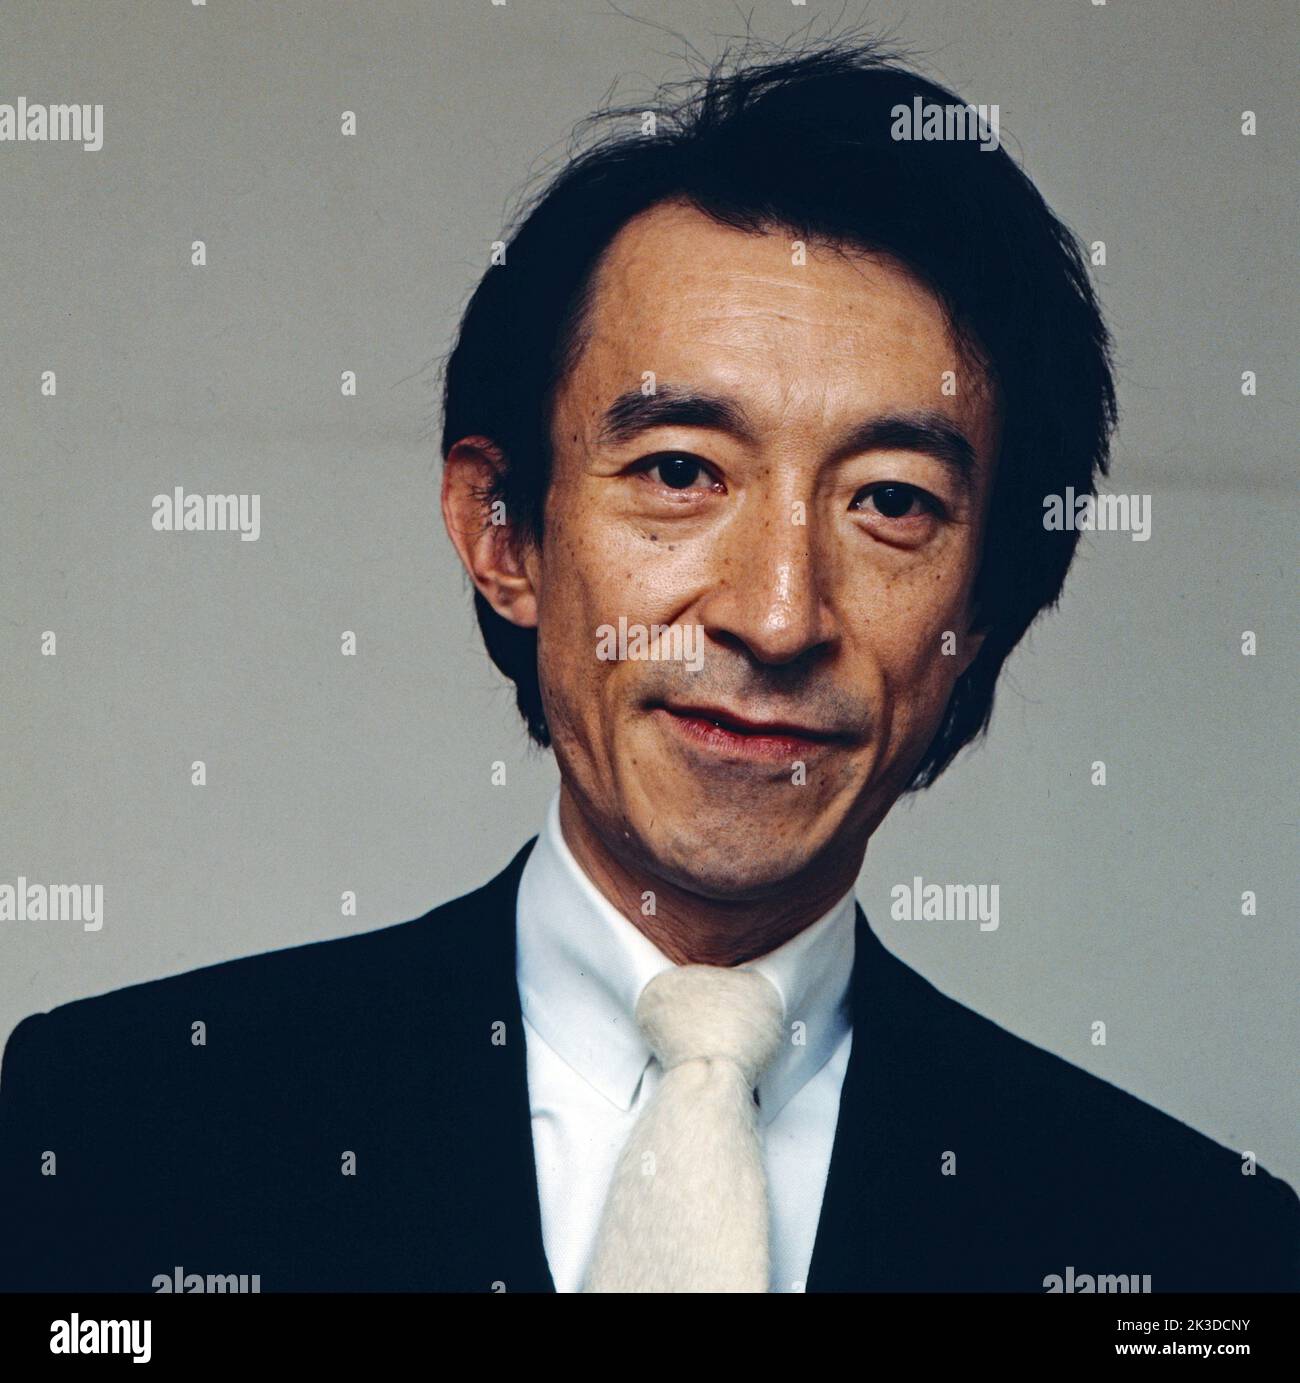 Hiroshi Wakasugi, Japanischer Dirigent, Portrait, Deutschland, 1981. Hiroshi Wakasugi, chef d'orchestre japonais, portrait, Allemagne, 1981. Banque D'Images